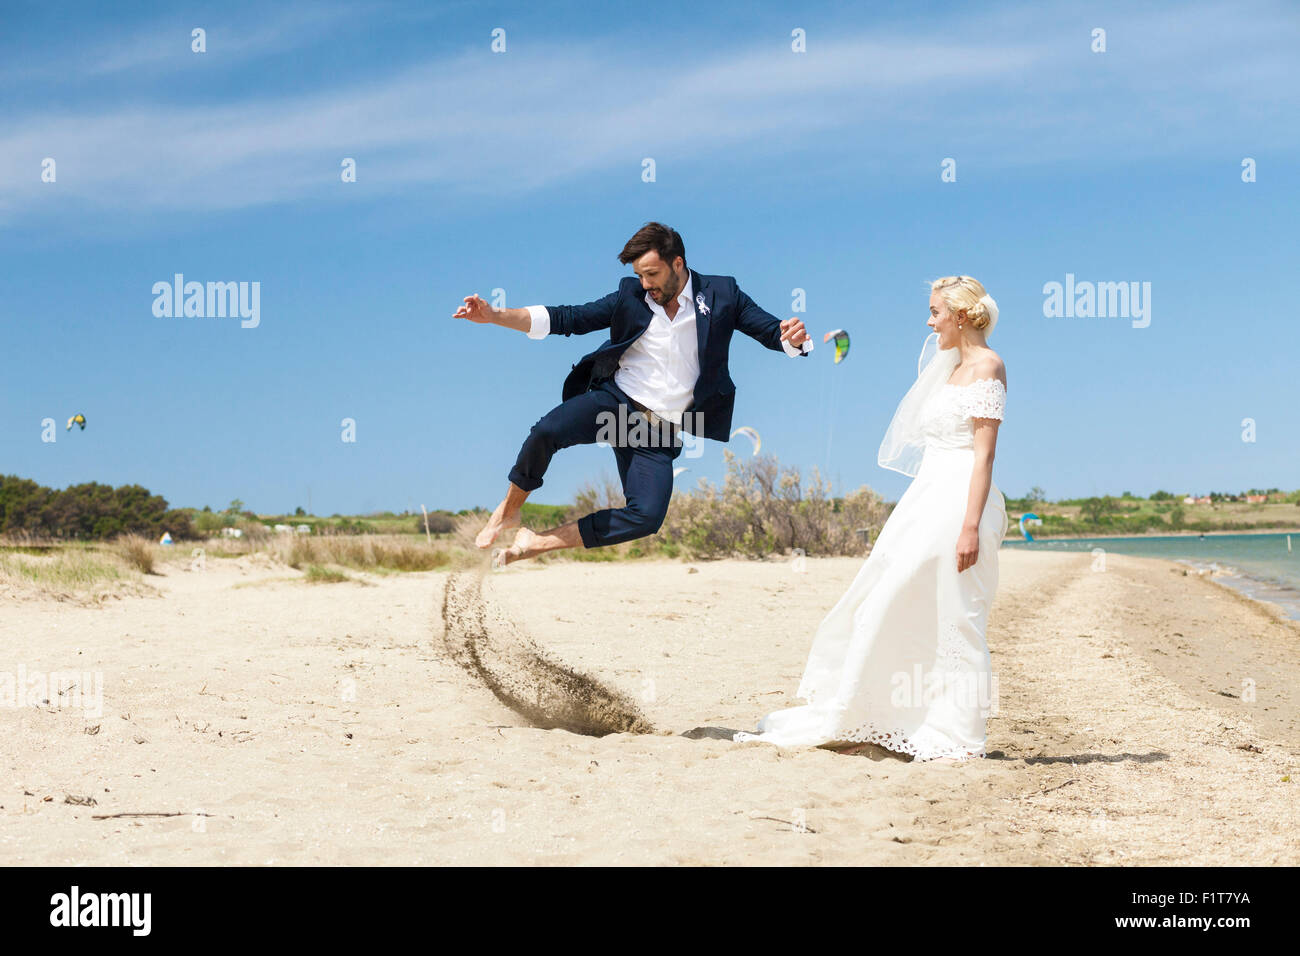 Bride and bridegroom on beach having fun Stock Photo